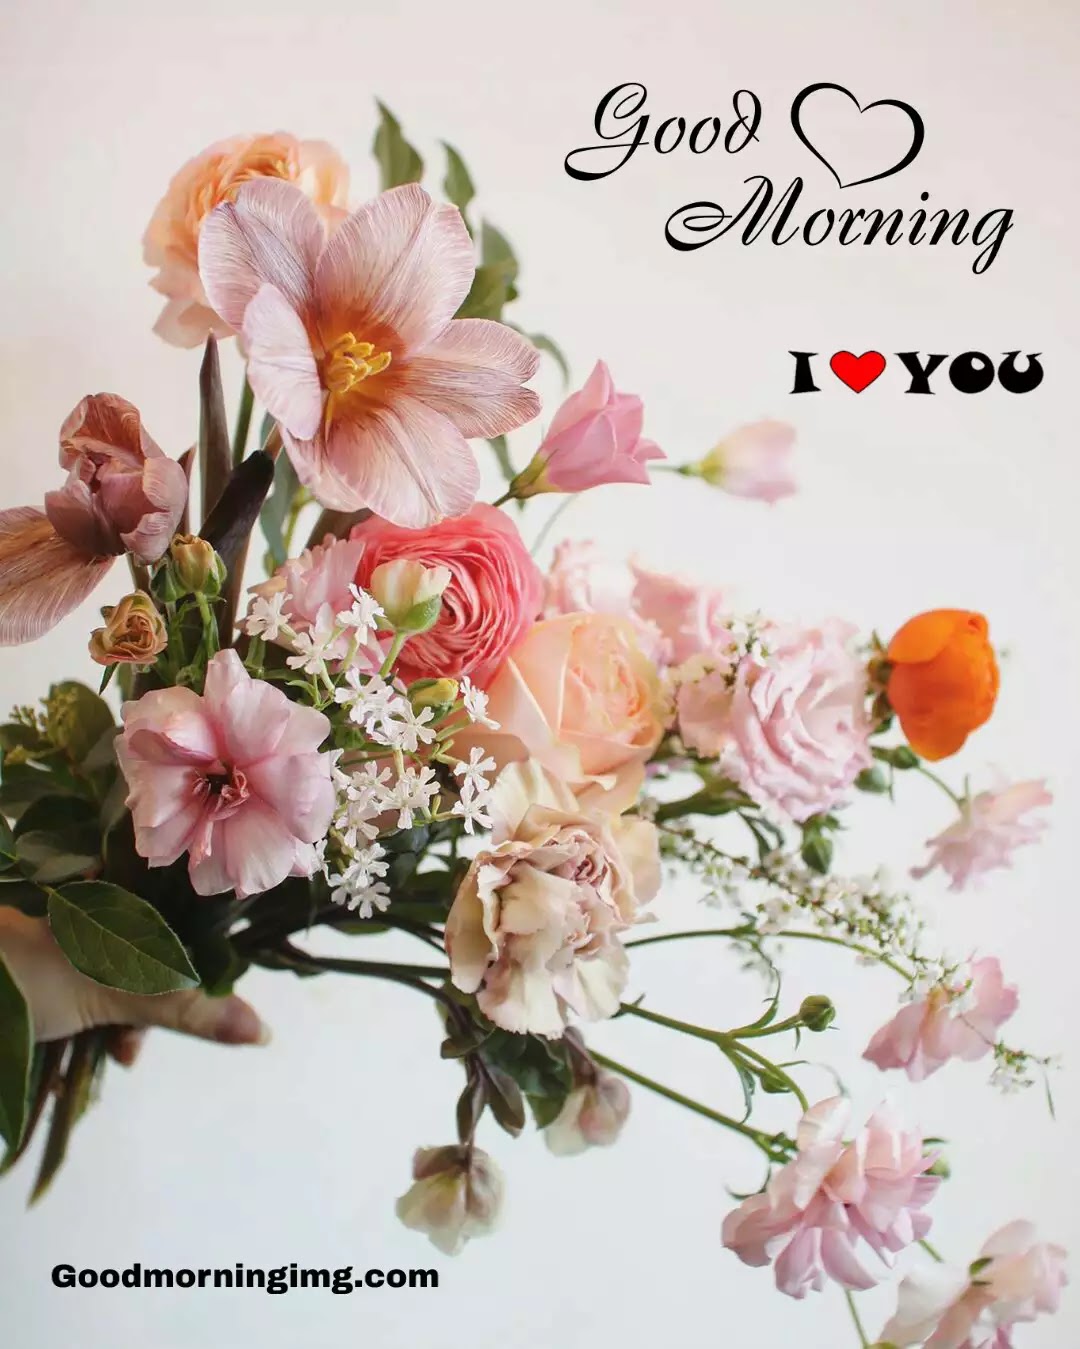 Good Morrning Flowers Image, Photo Free Download